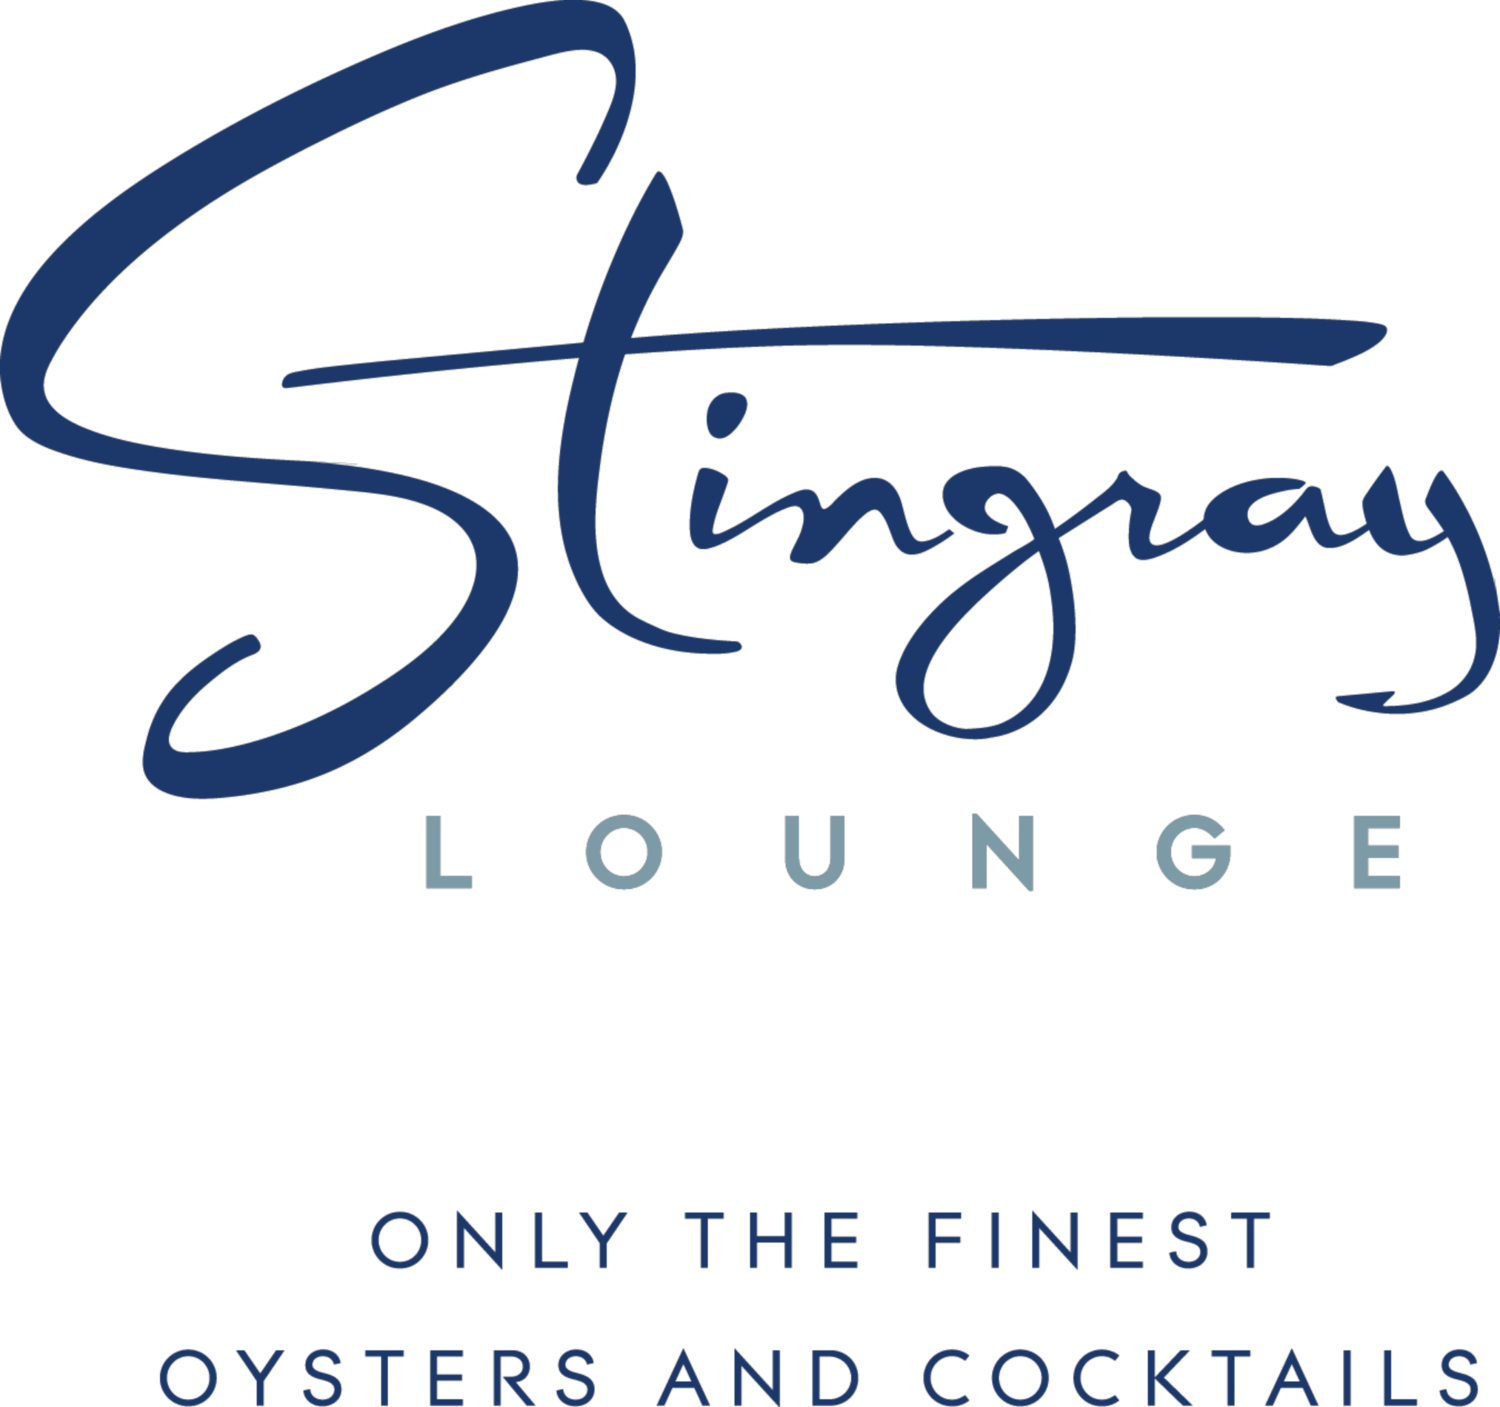 Stingray Lounge